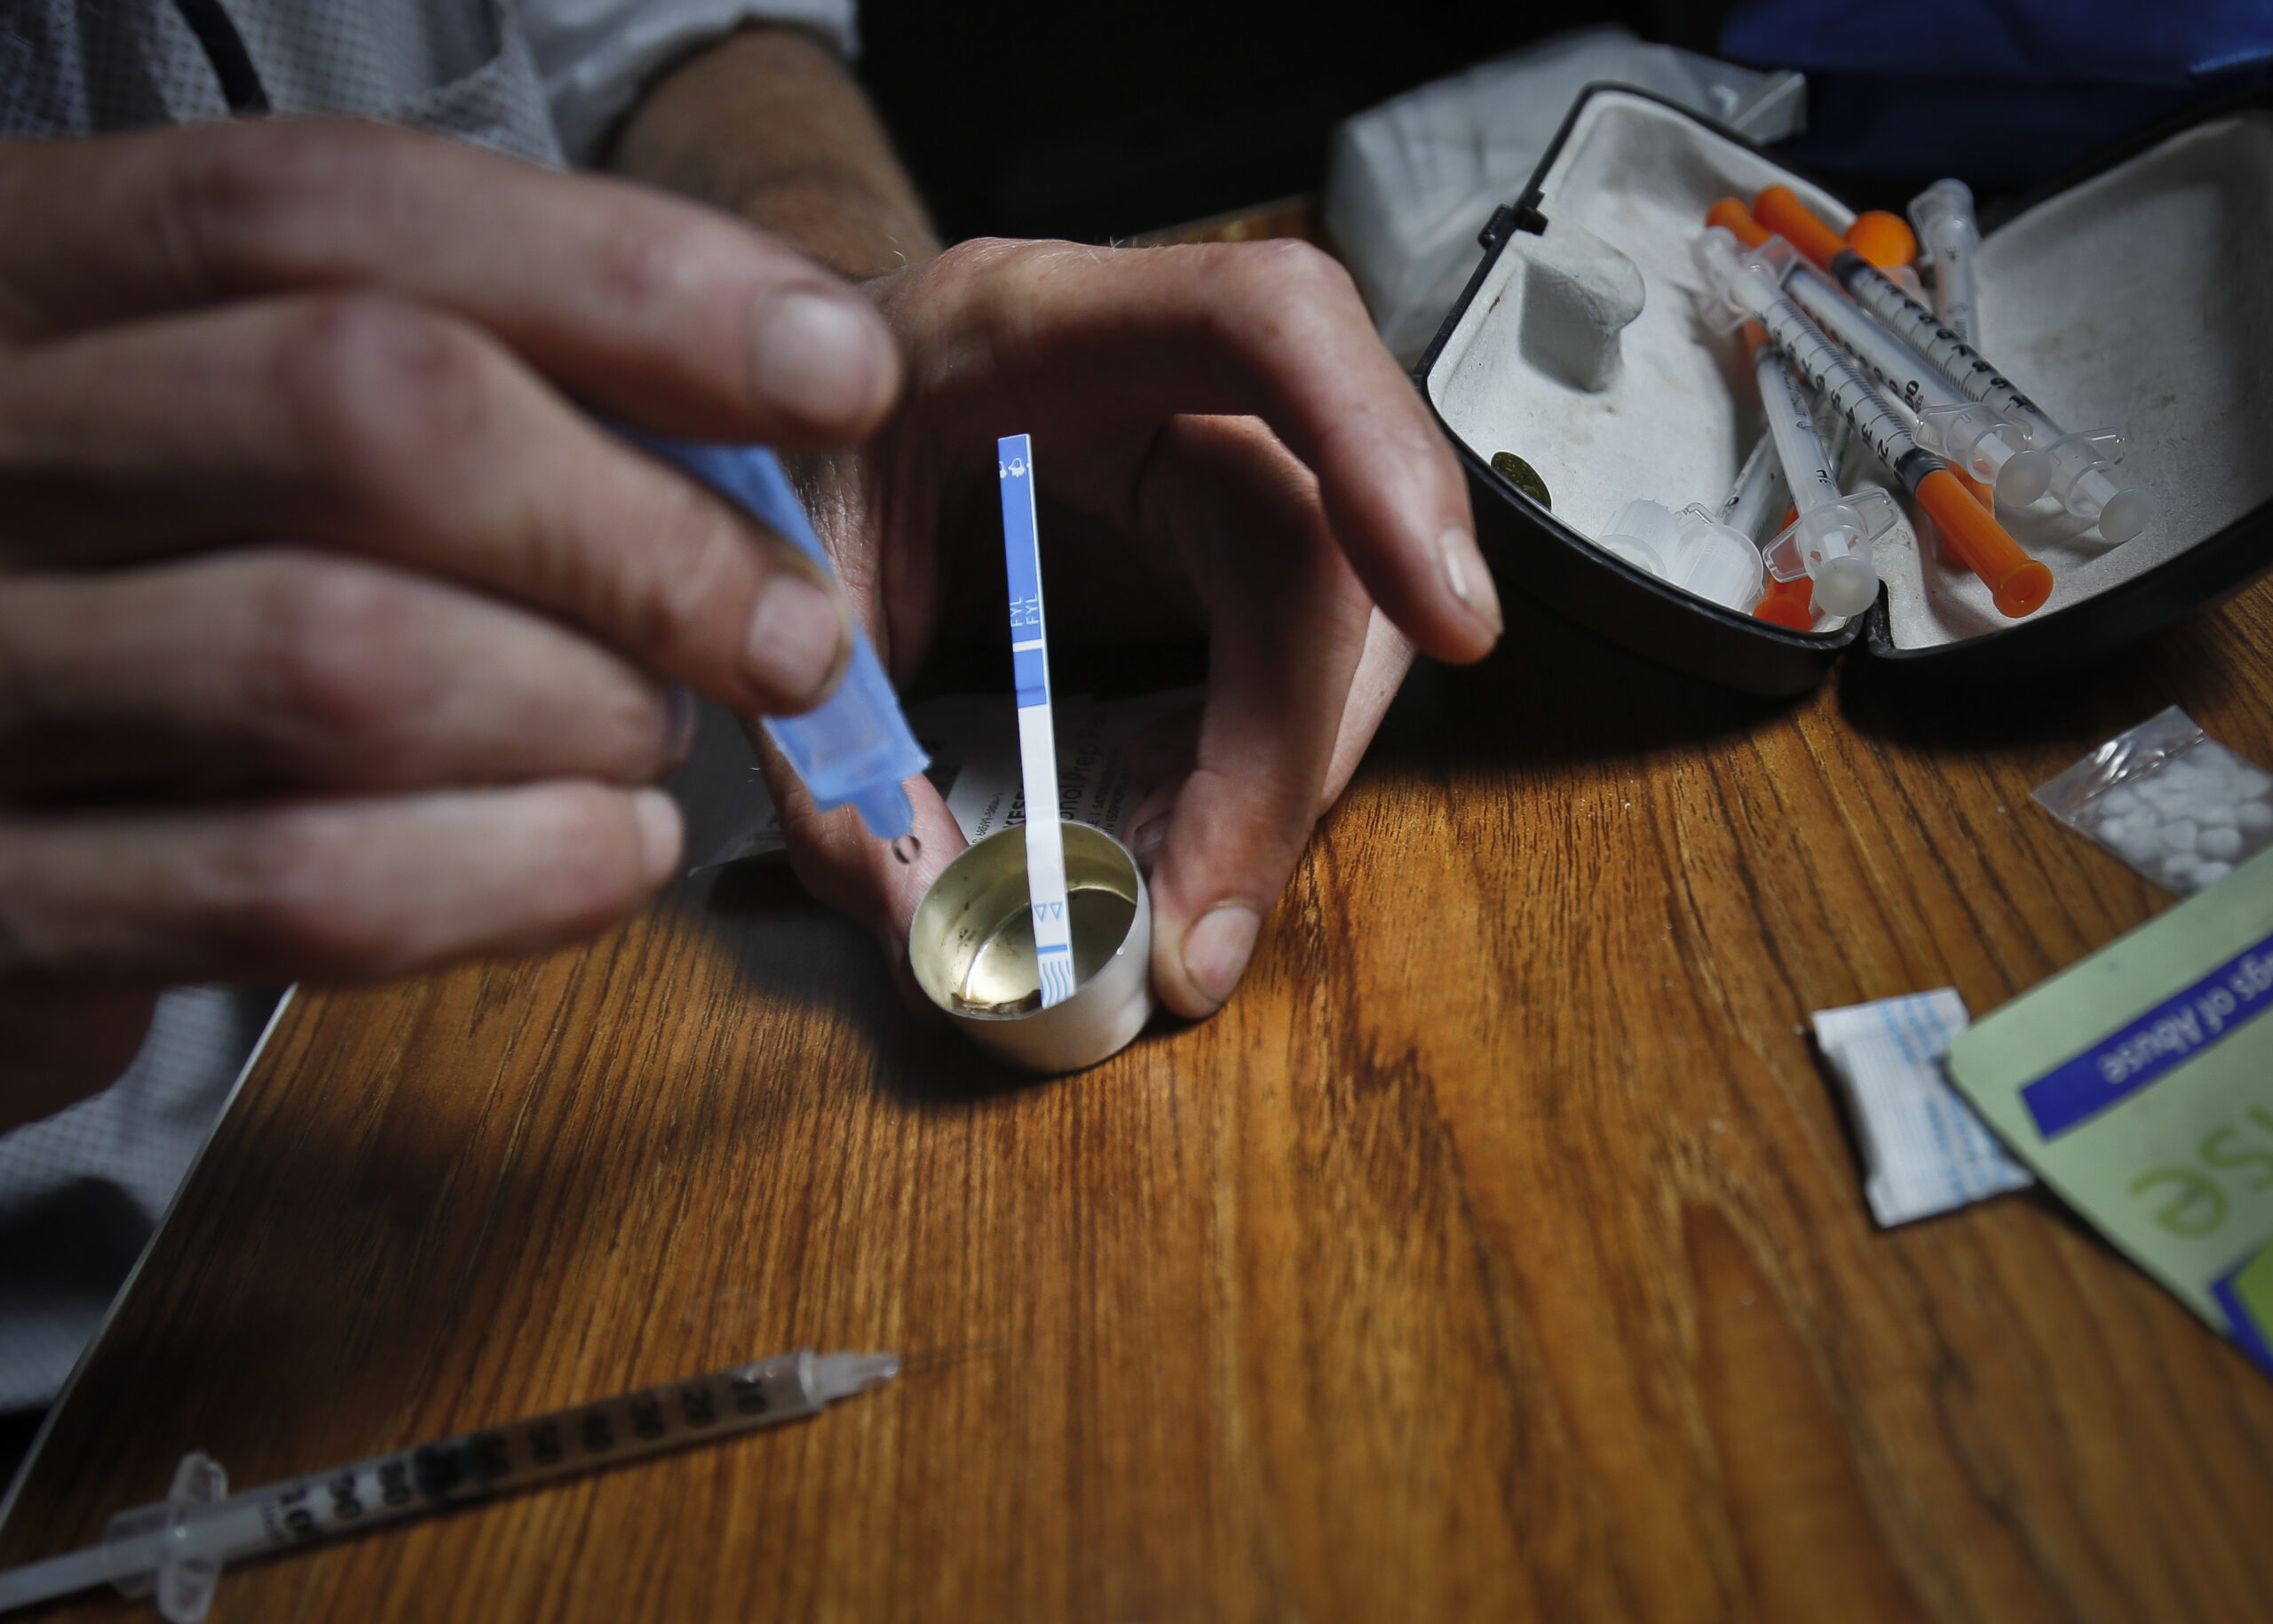 A person prepares heroin